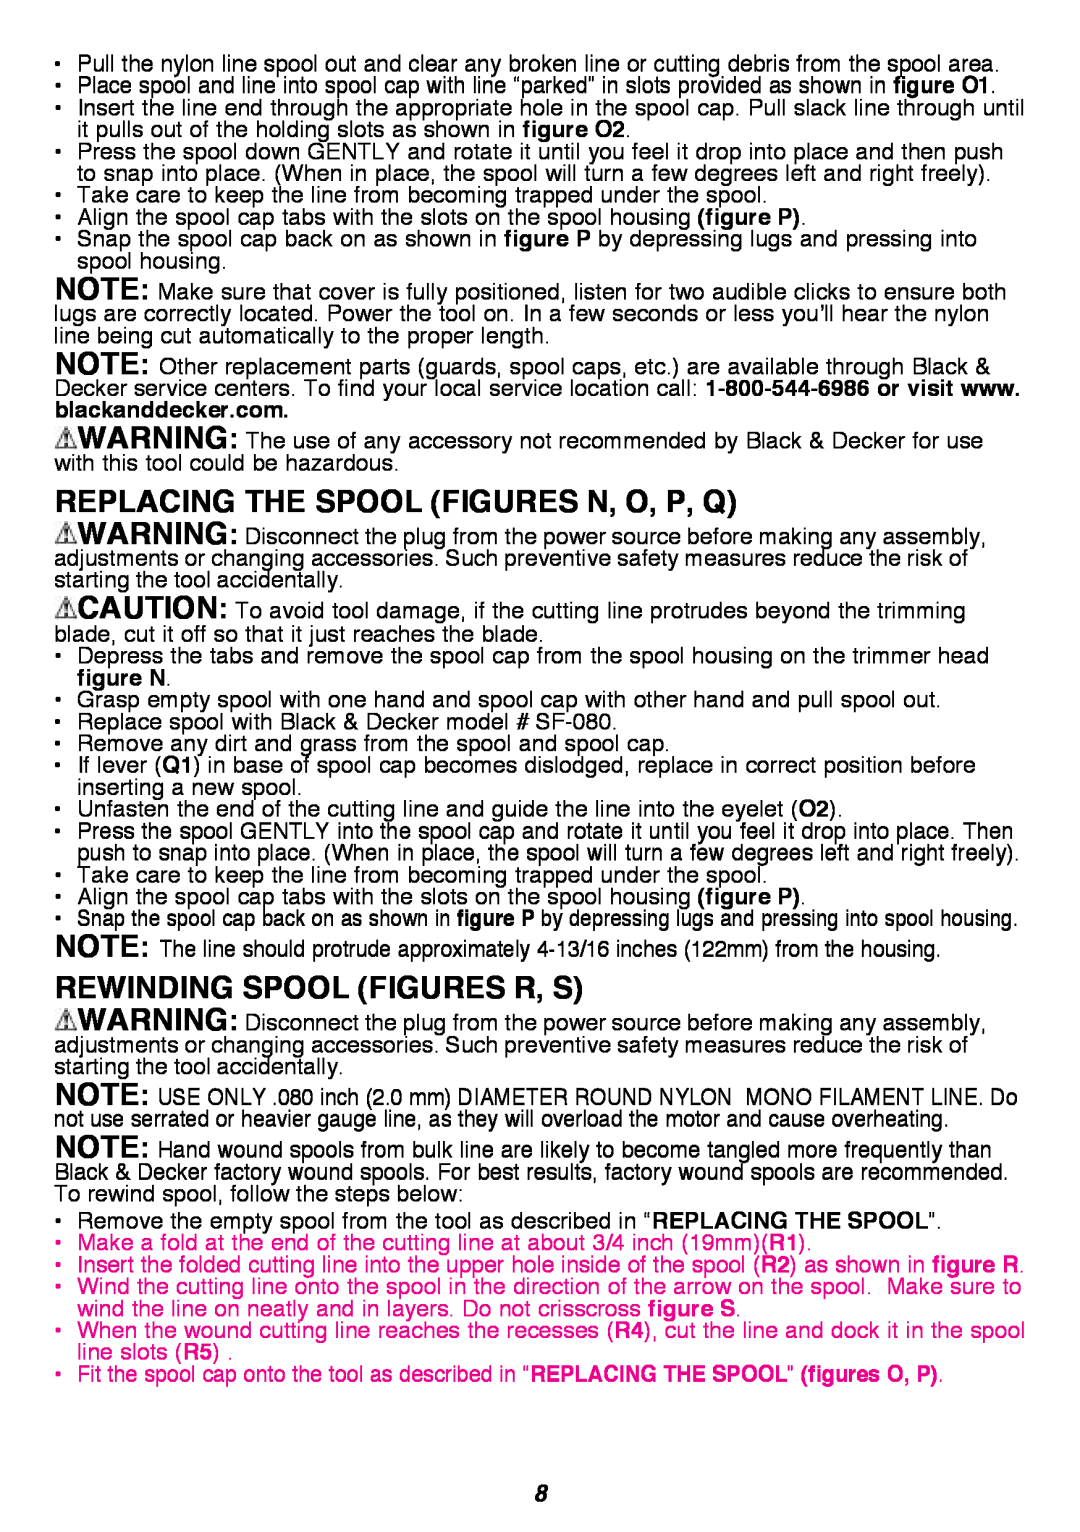 Black & Decker SF-080 instruction manual REPLACING THE SPOOL figures N, O, P, Q, REWINDING SPOOL figures R, S 